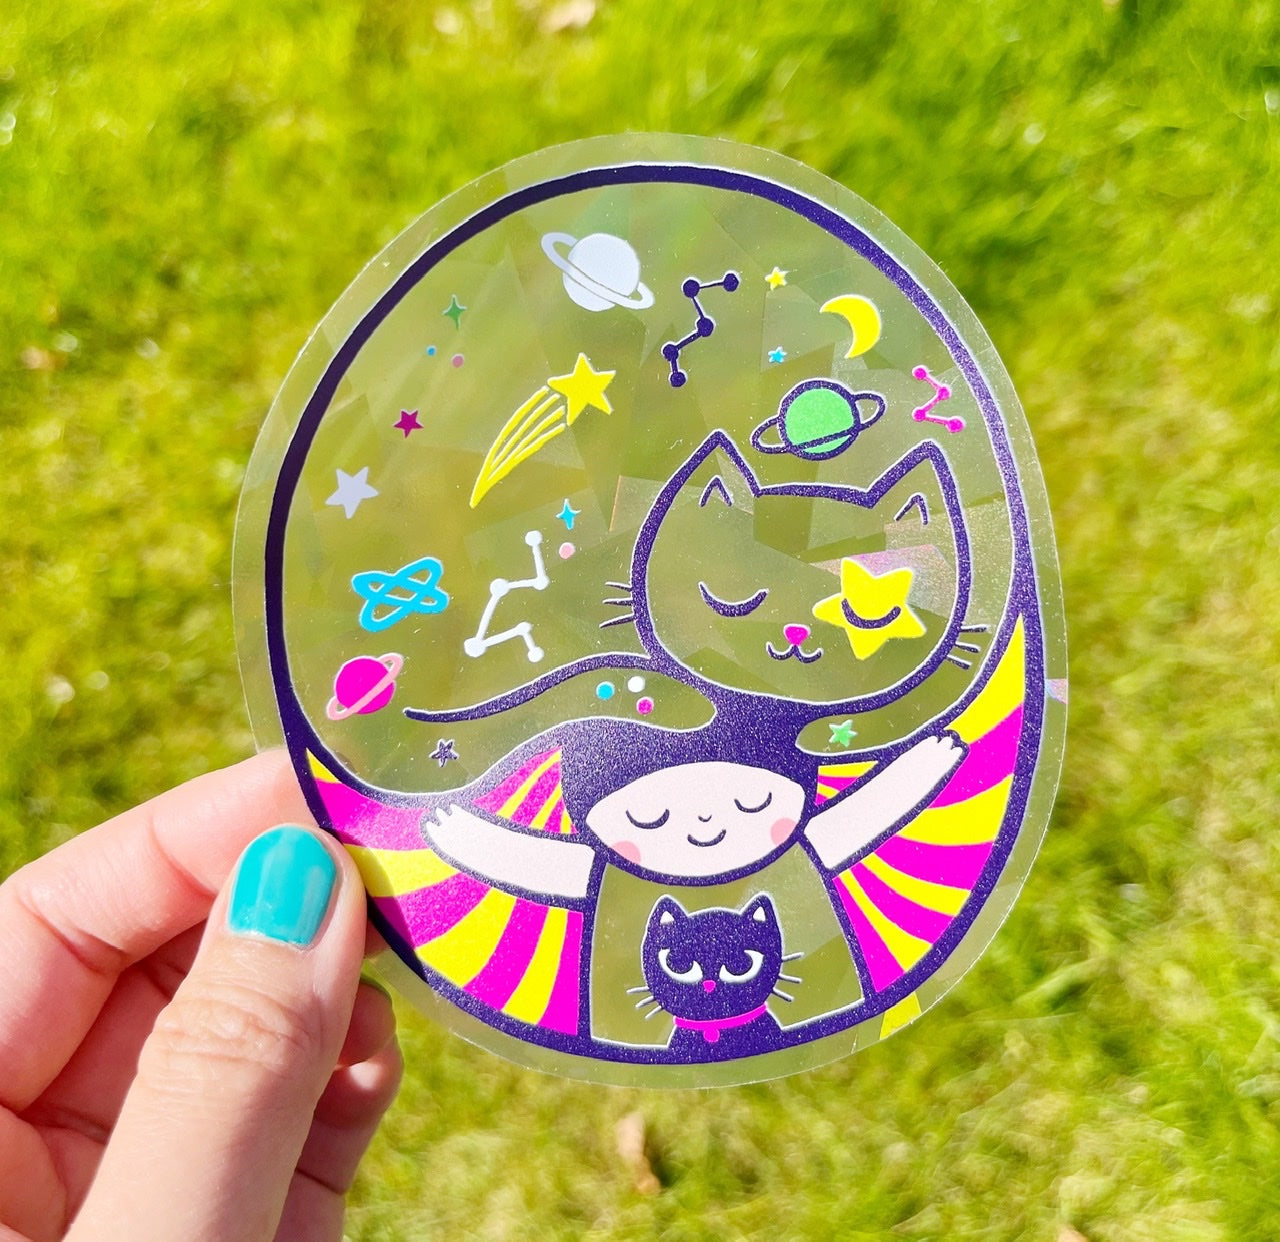 Magical space cat Suncatcher window decal - Rainbow maker window sticker